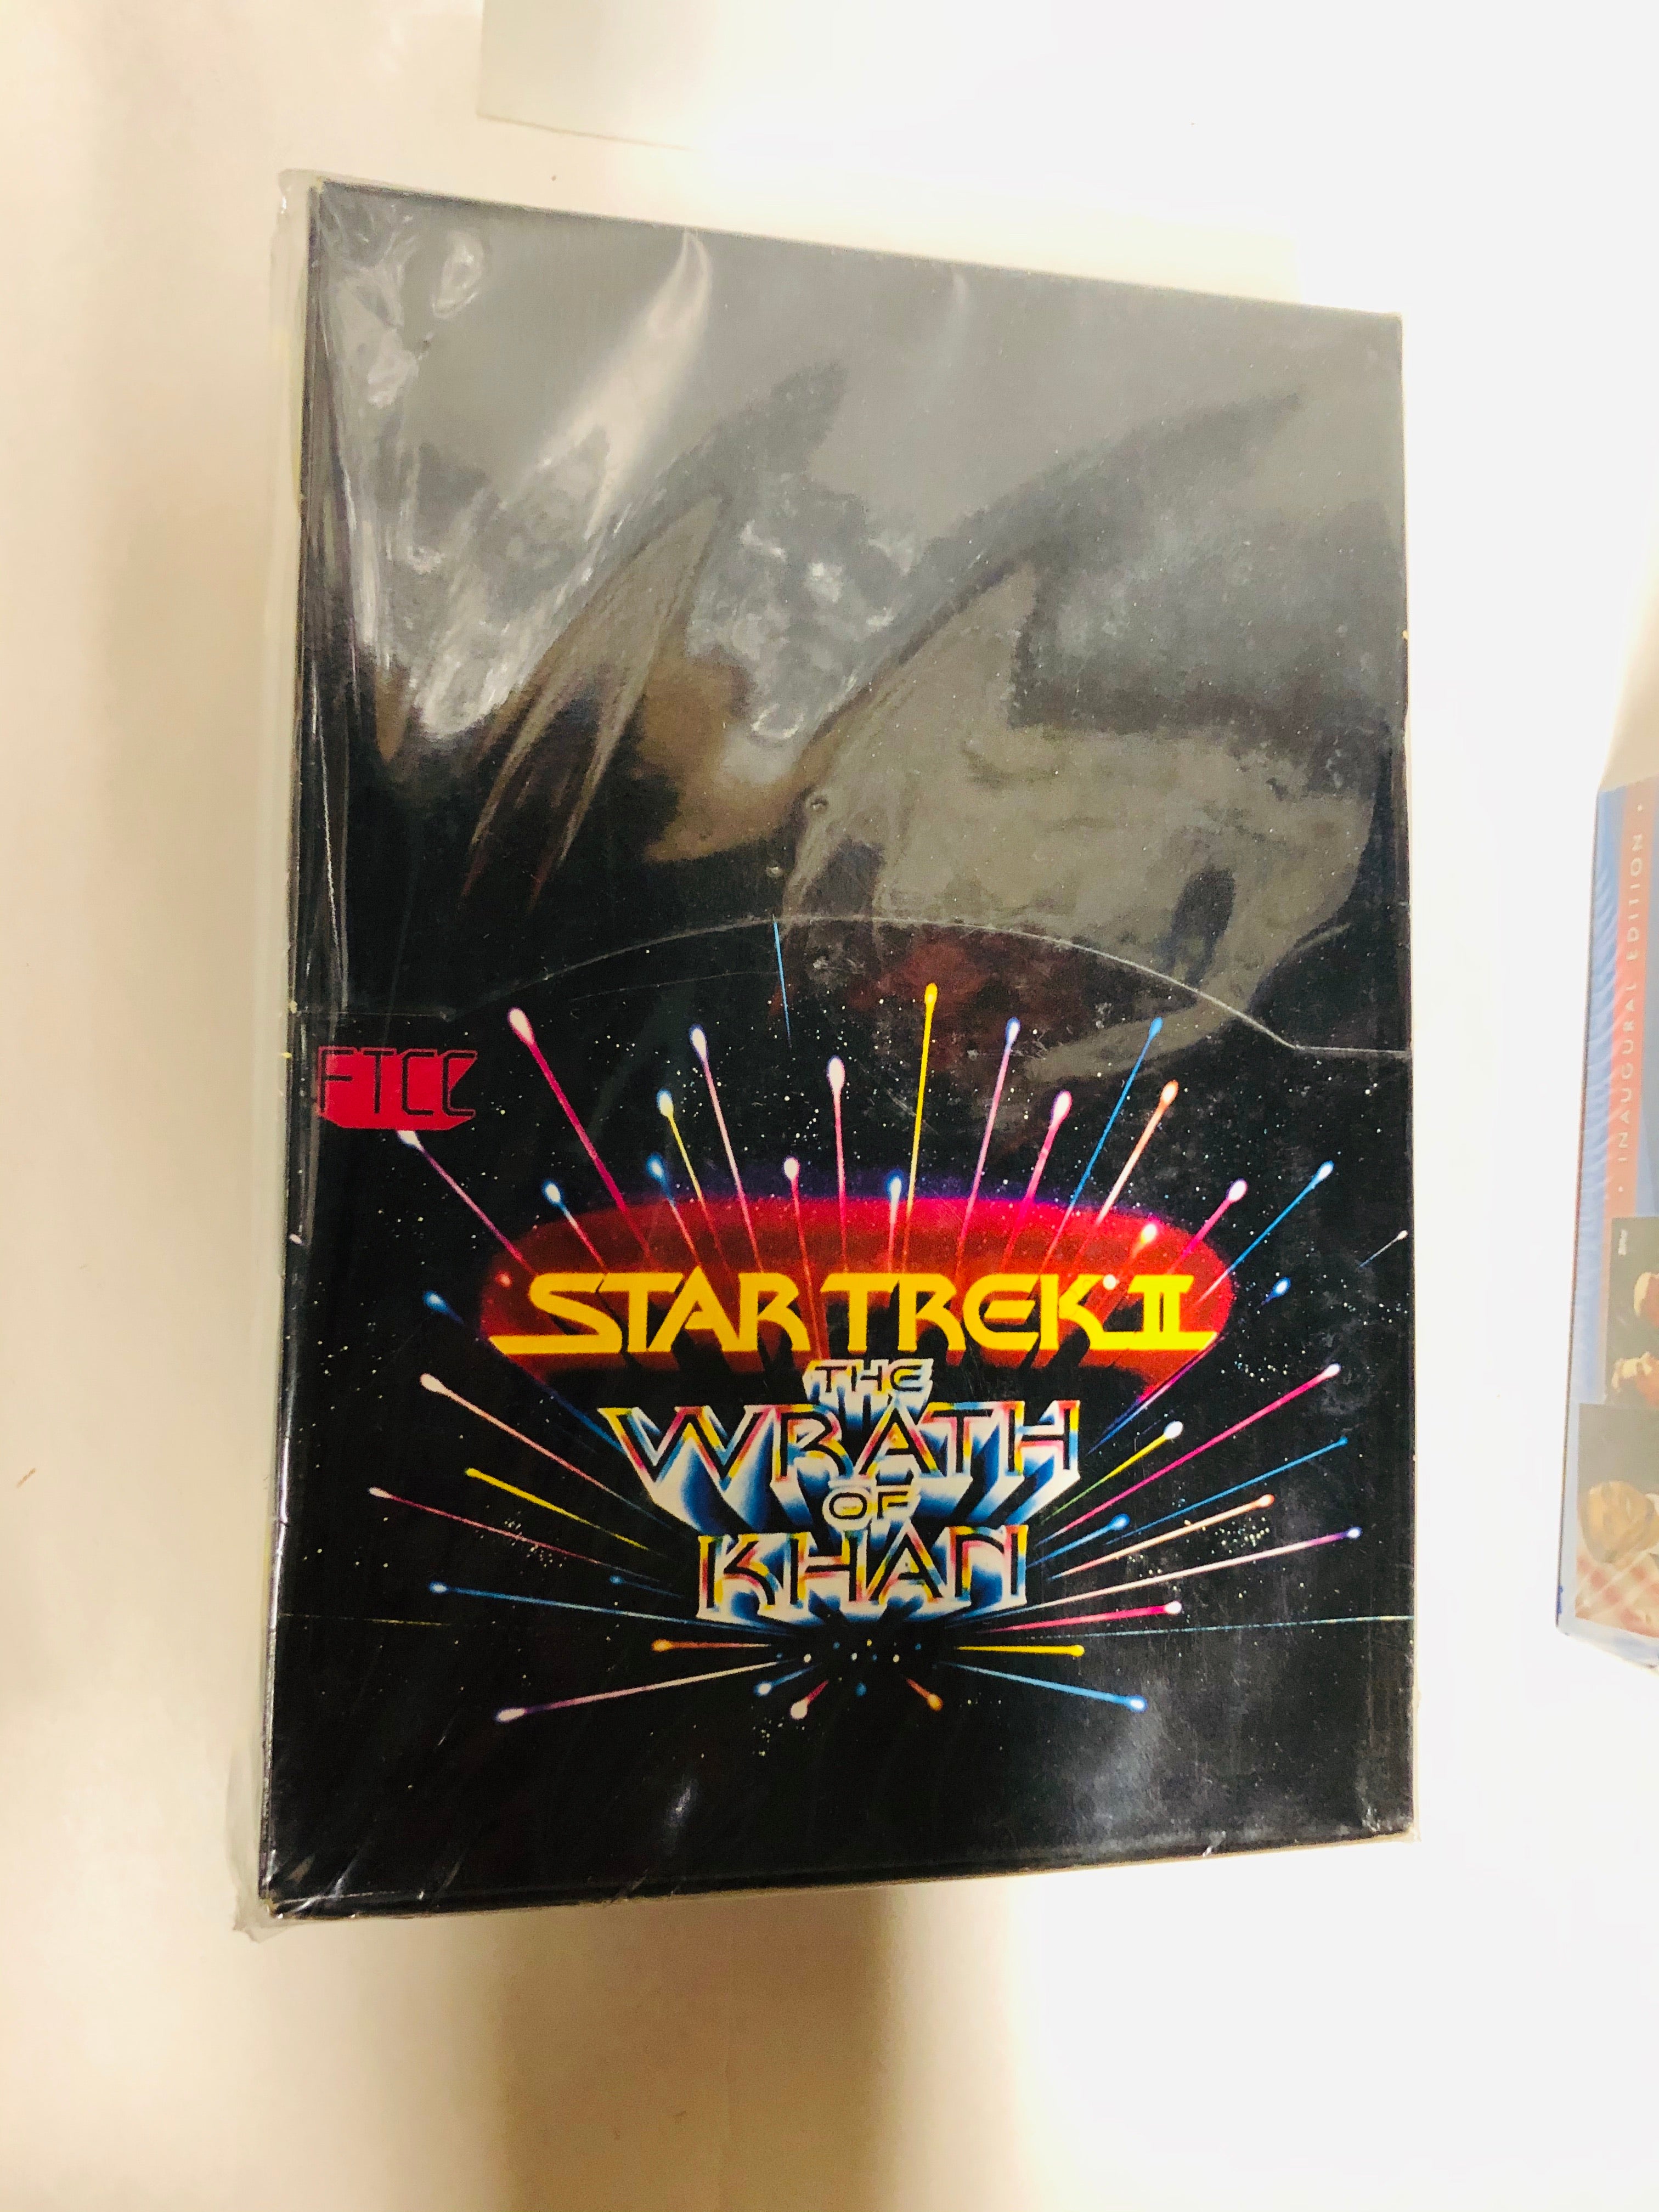 1982 Star Trek Wraith of Khan movie cards full box